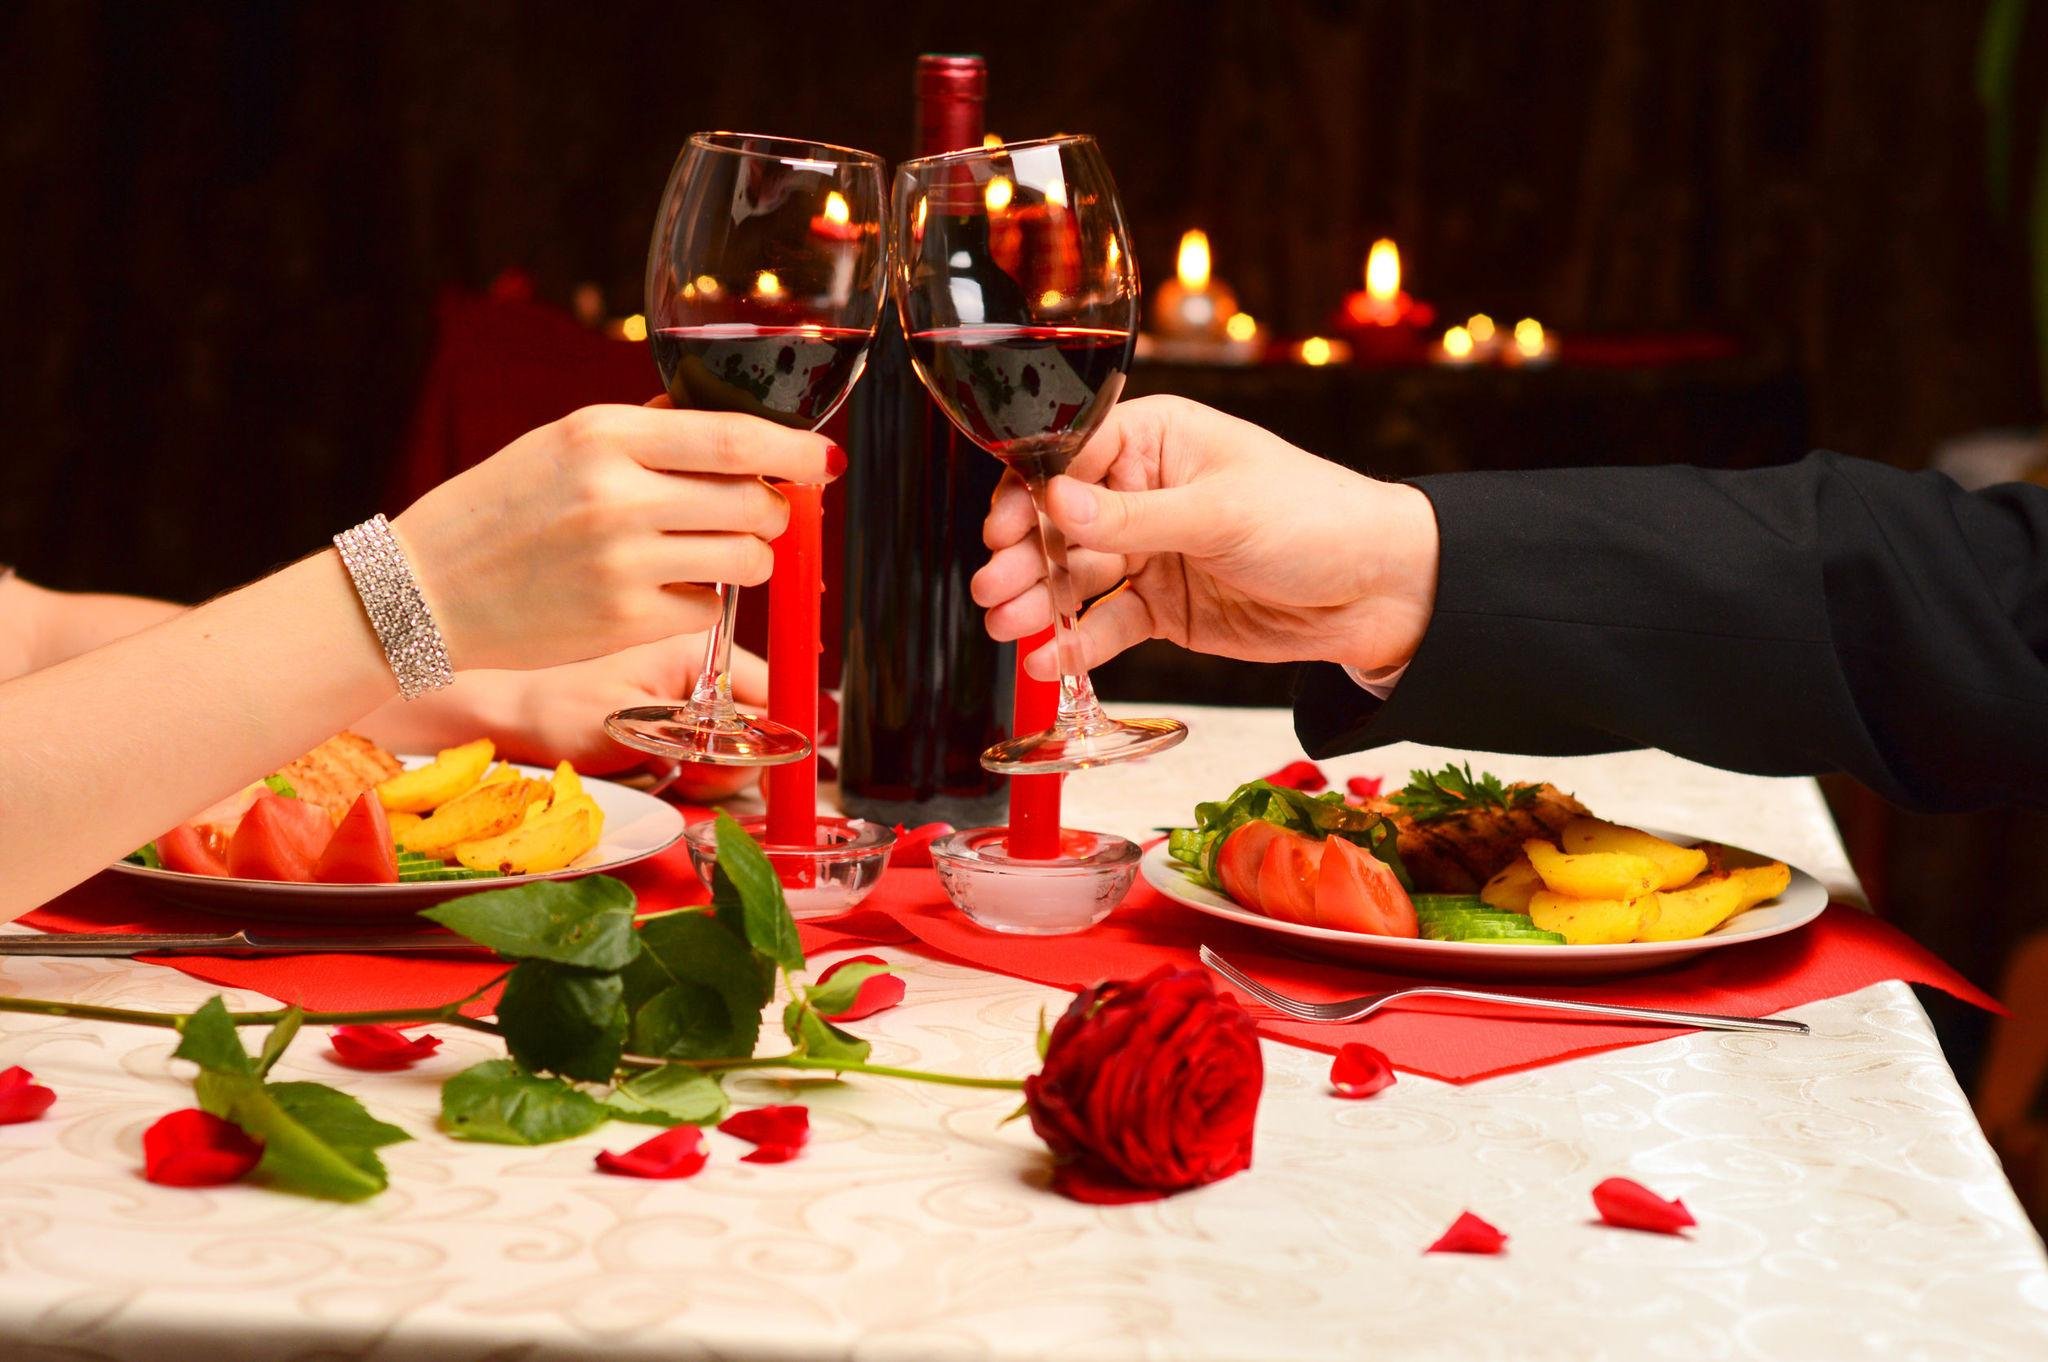 Романтик для мужа в домашних условиях: рекомендации, рецепты блюд